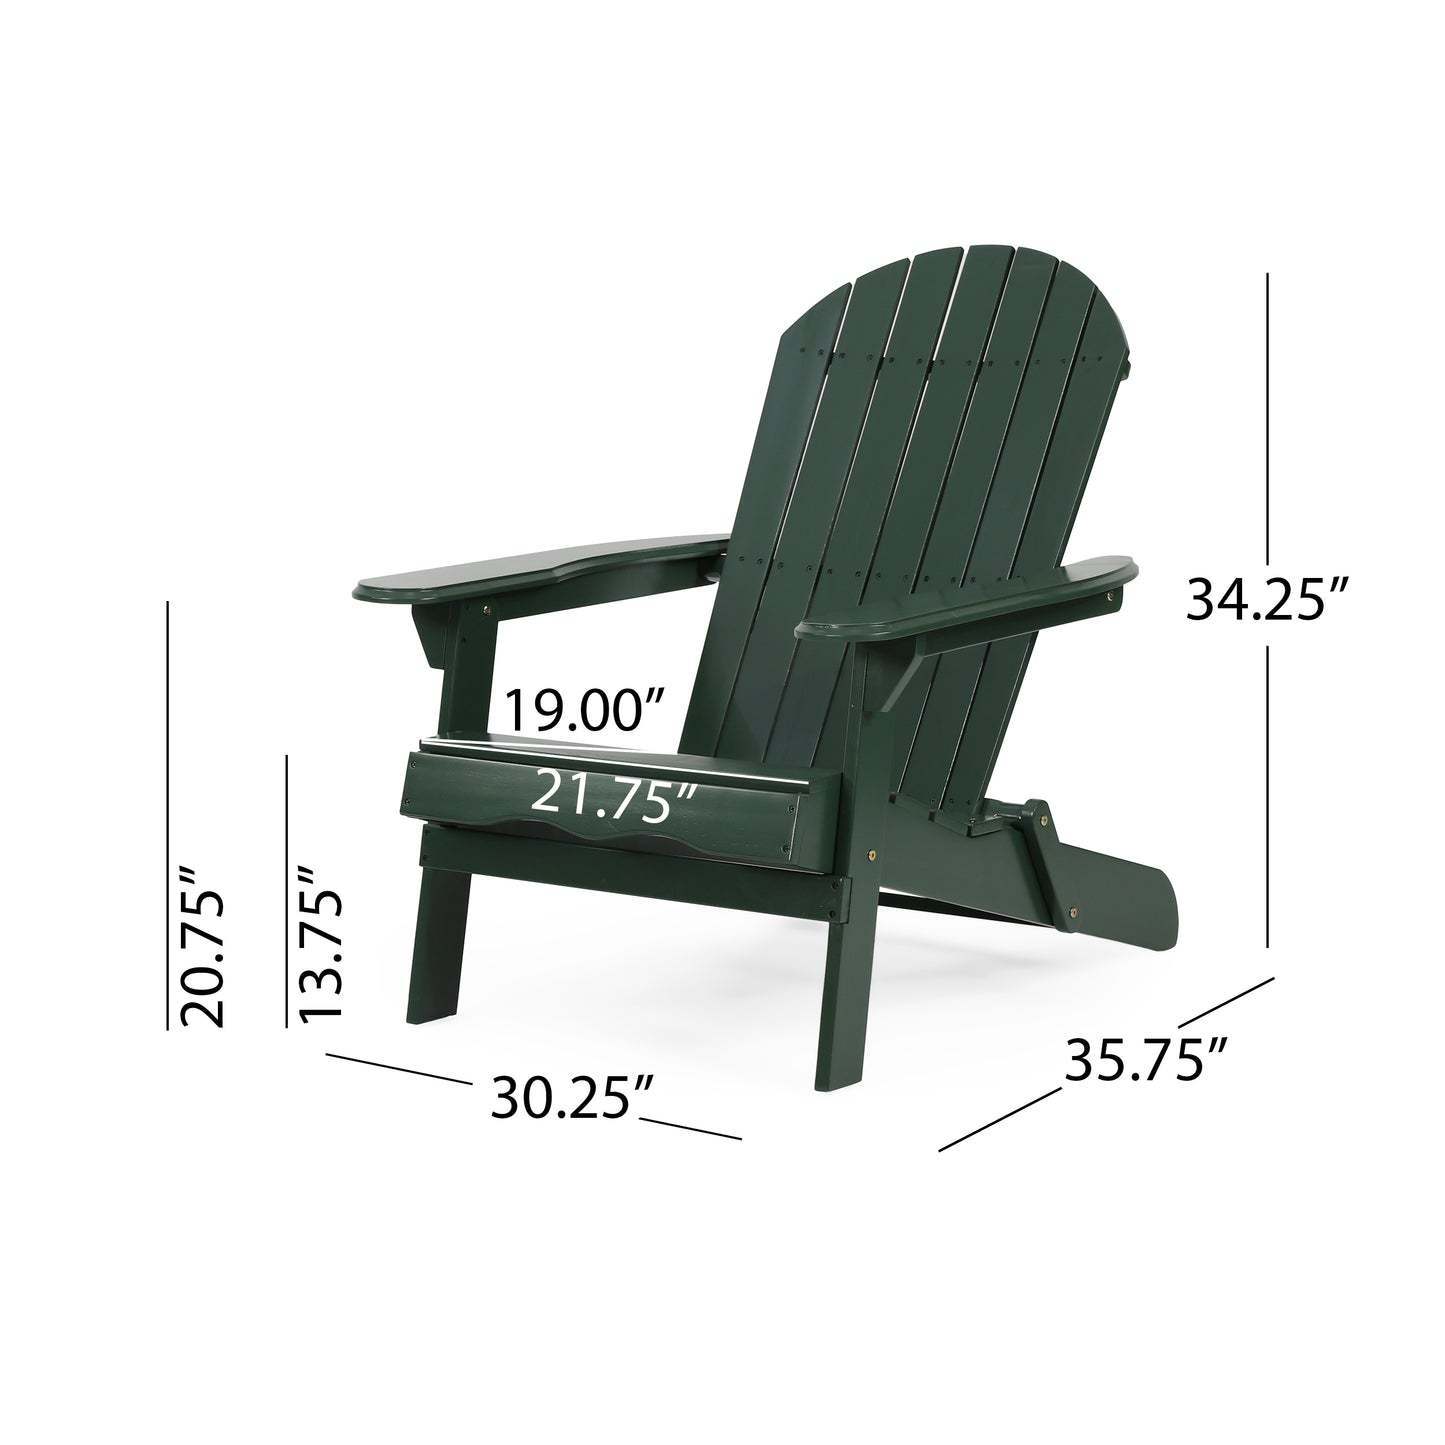 Outdoor All Solid Wood Wooden Adirondack Chair Dark Green